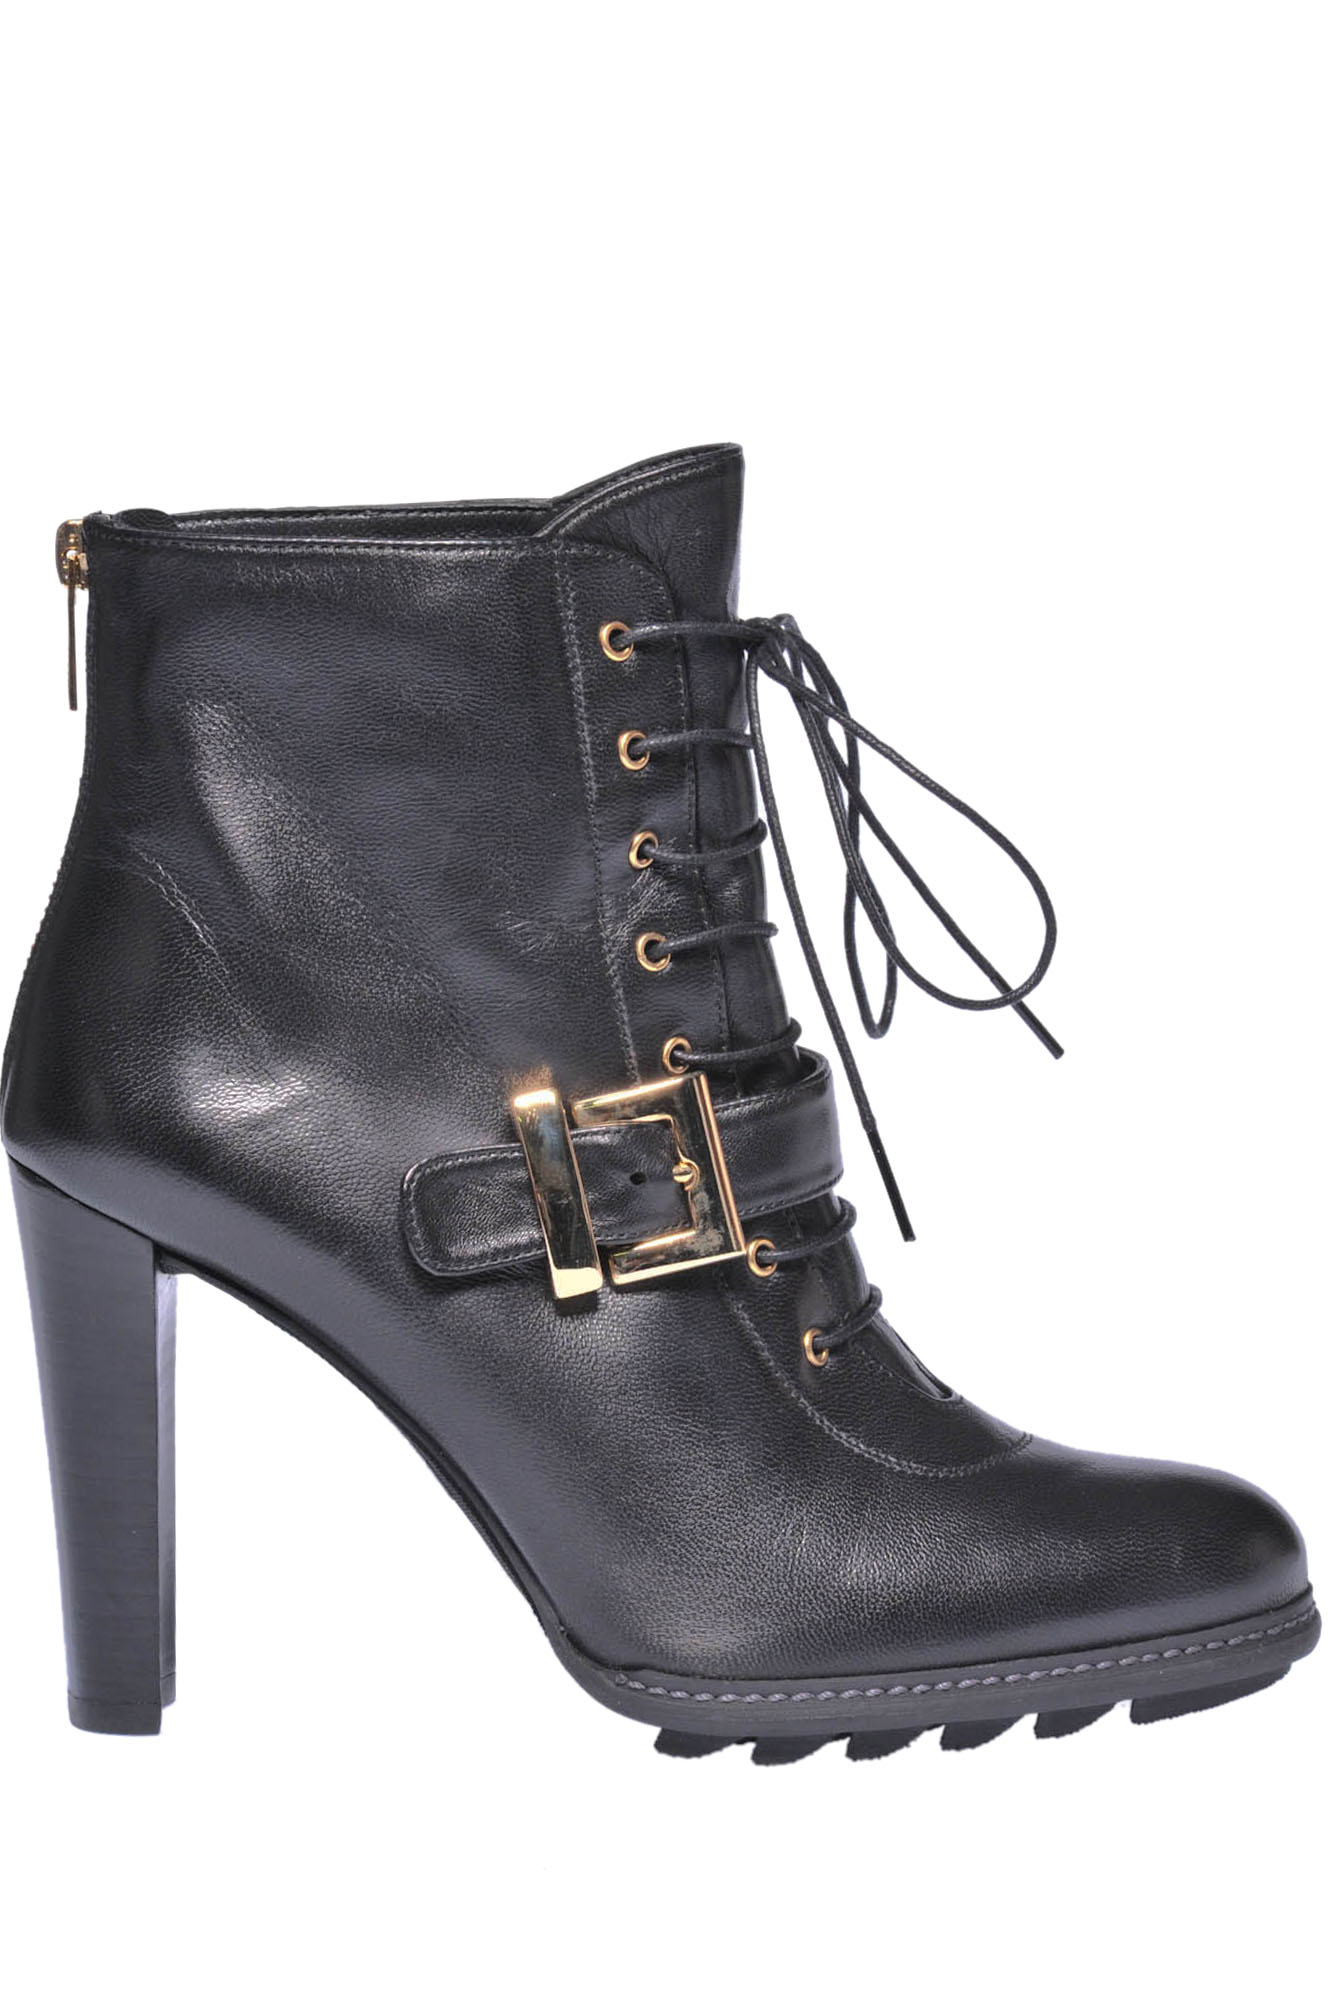 Stuart Weitzman Quinn lace-up ankle boots - Buy online on Glamest ...